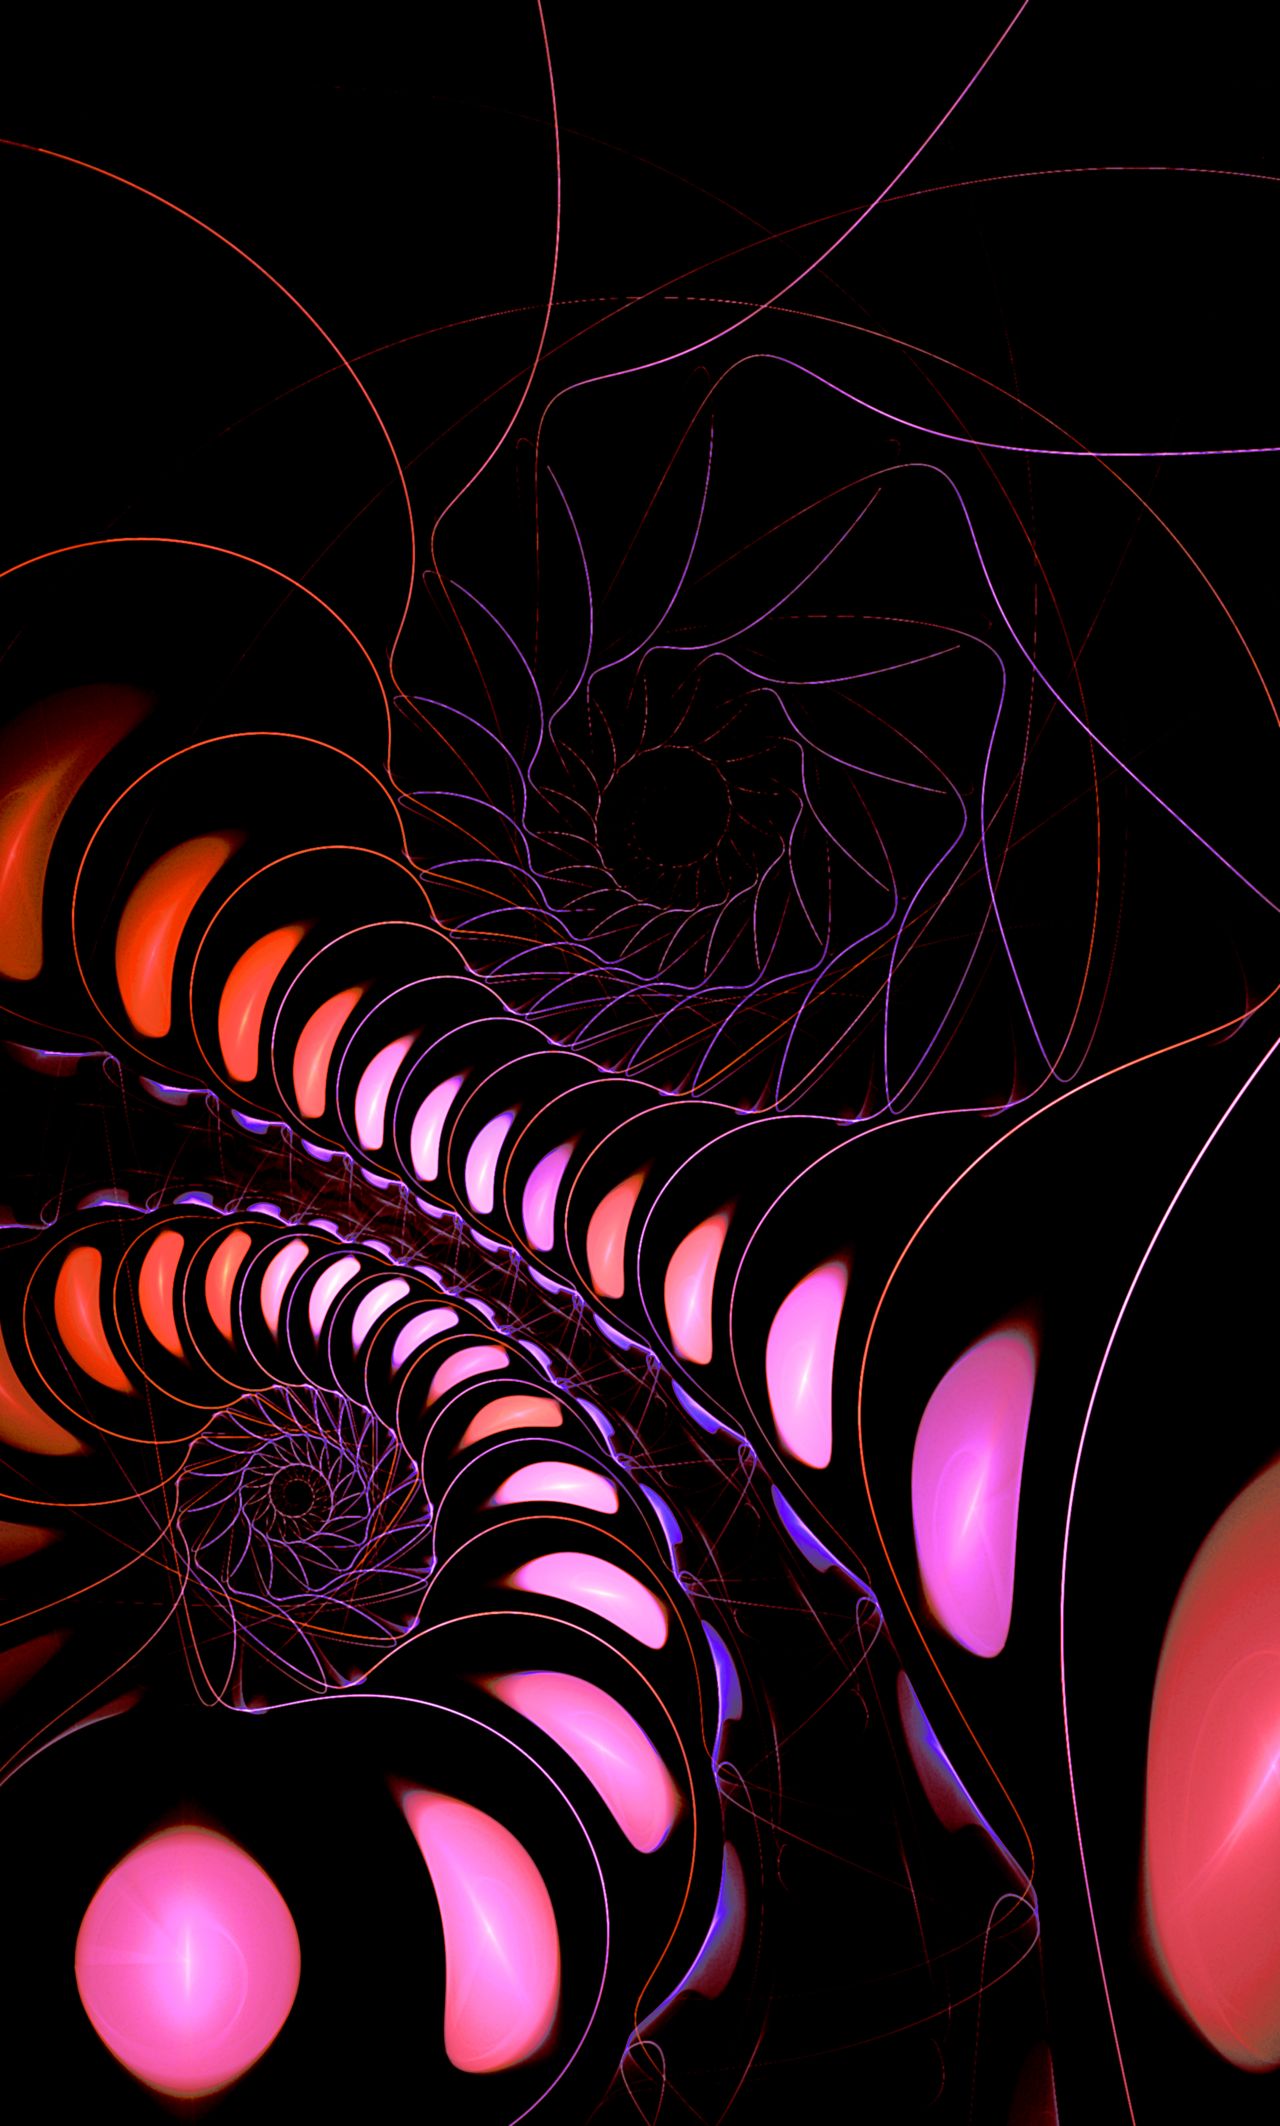 1080p pic involute, spiral, 3d, fractal